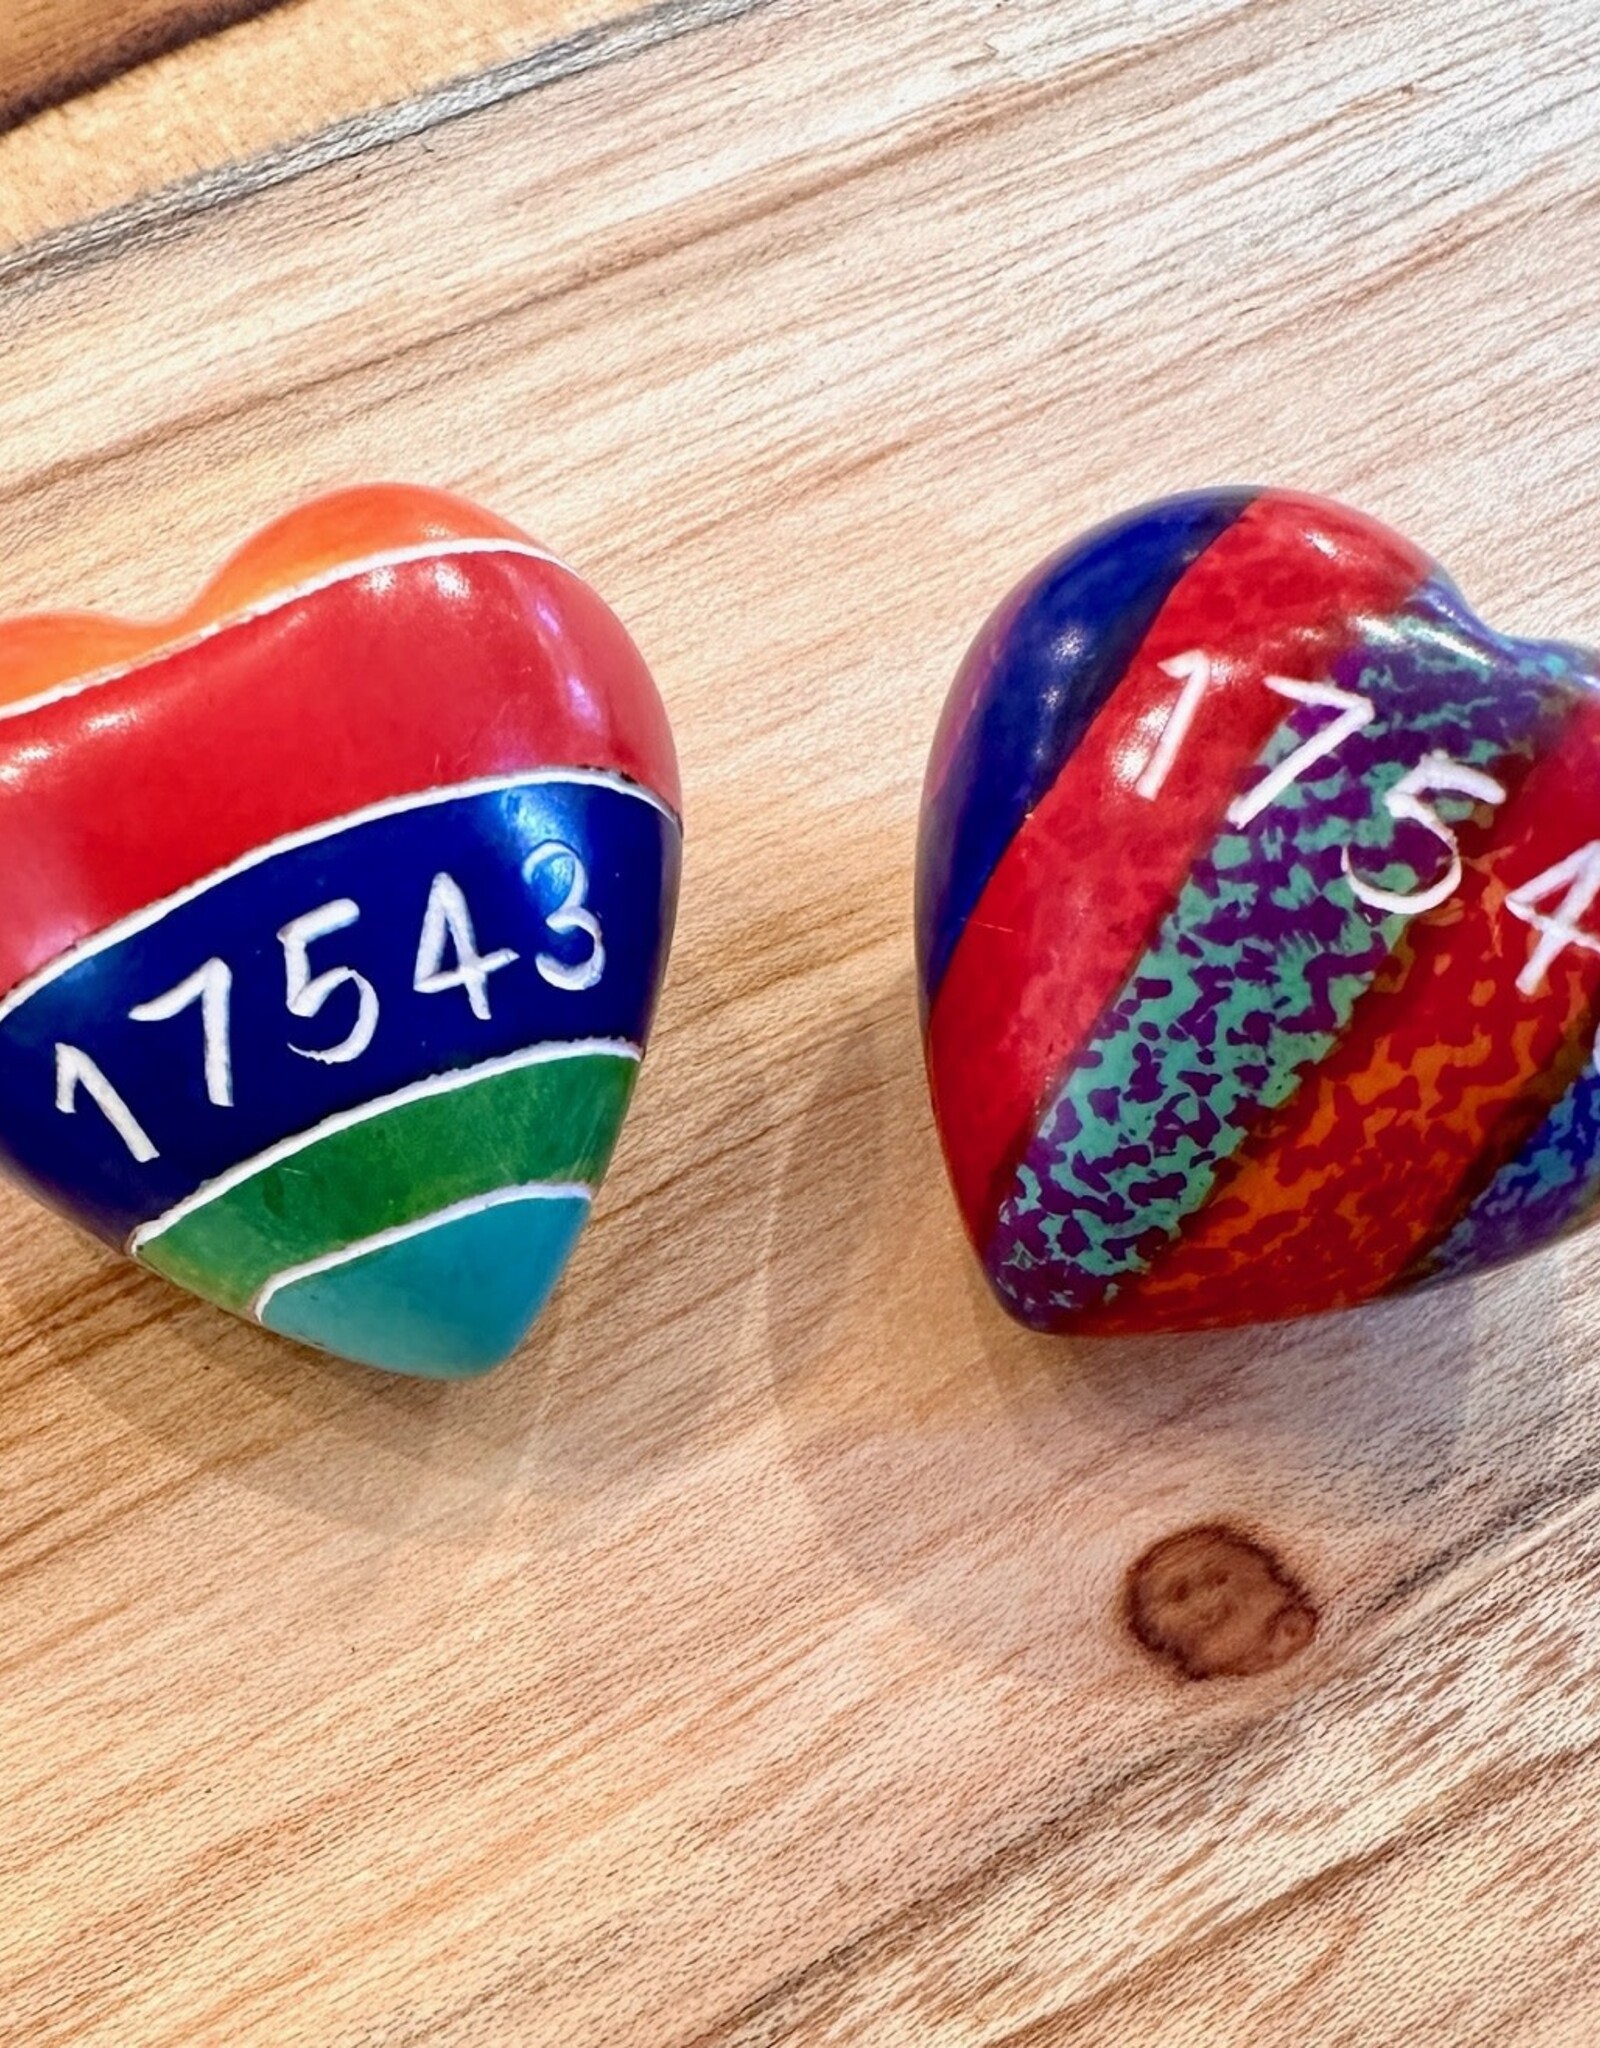 Global Crafts 17543 ZIP Word Hearts - Multicolor